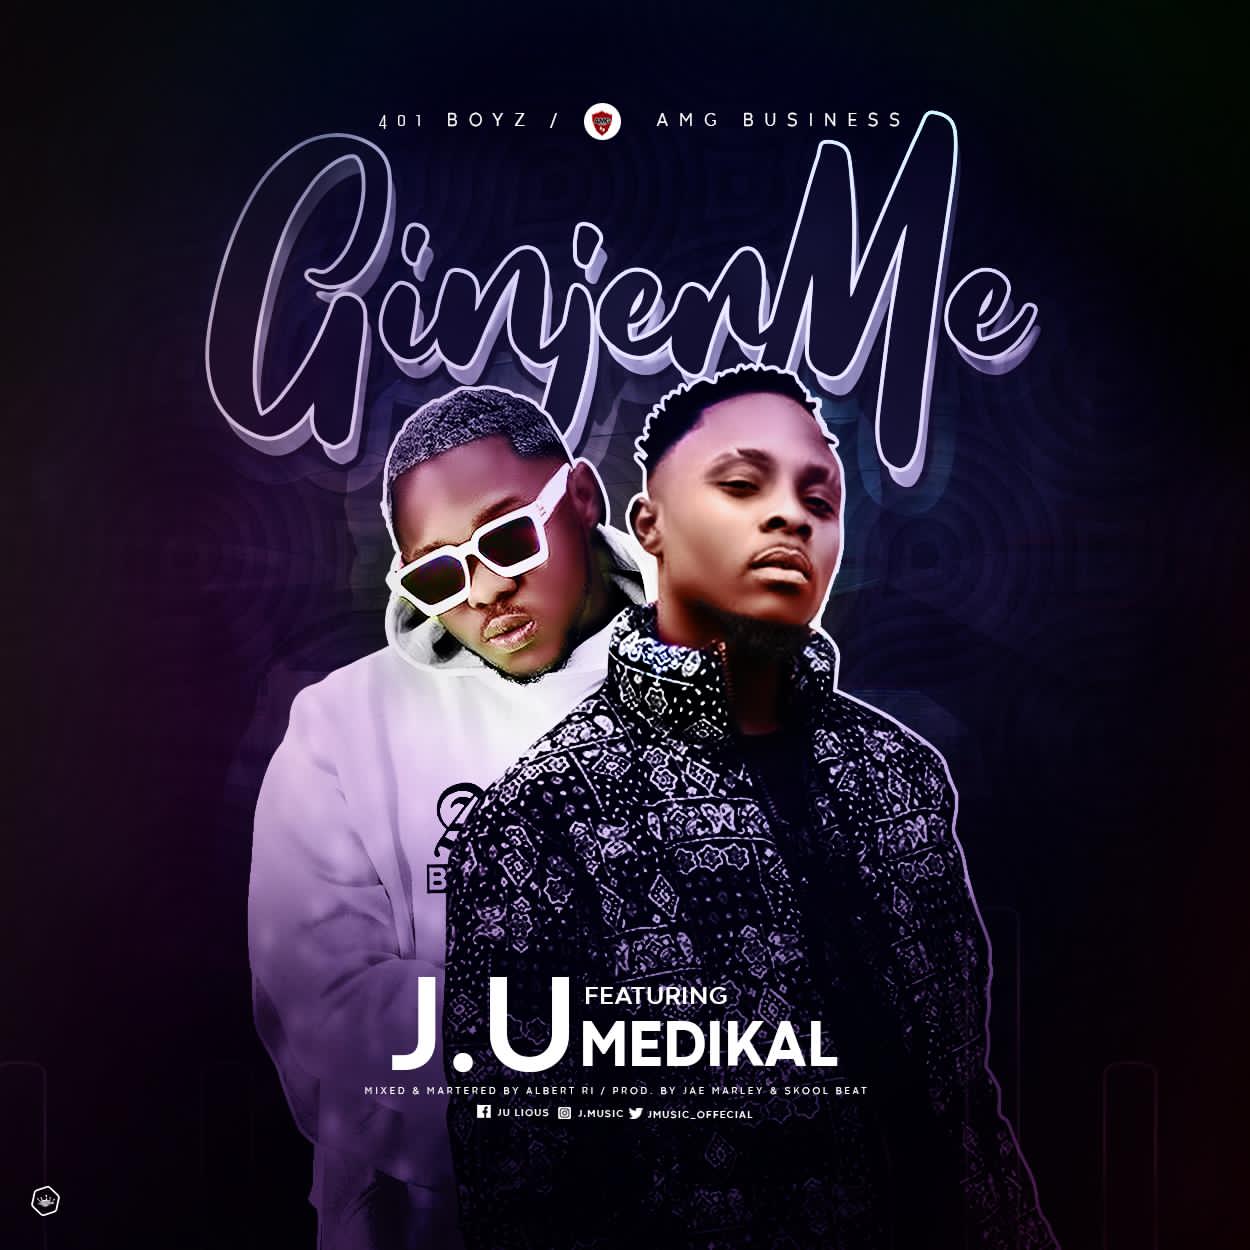 DOWNLOAD : Medikal J U - GINGER ME (Prod By Jae Marley) - GhanaSongs.com - Ghana Music Downloads